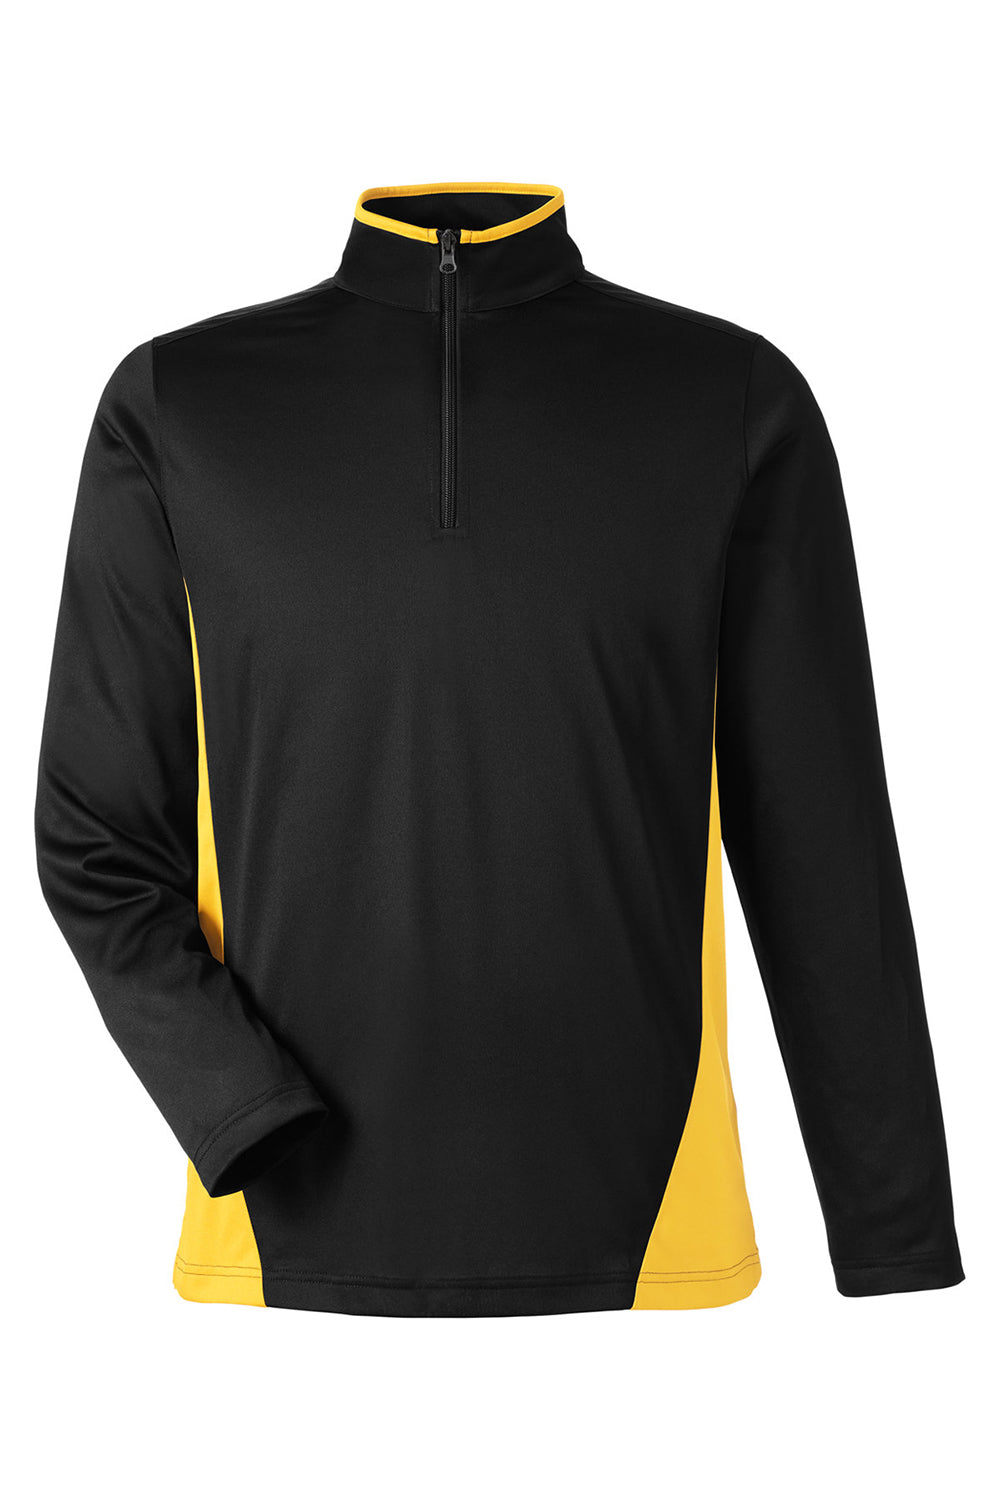 Harriton M786 Mens Flash Performance Moisture Wicking Colorblock 1/4 Zip Sweatshirt Black/Sunray Yellow Flat Front